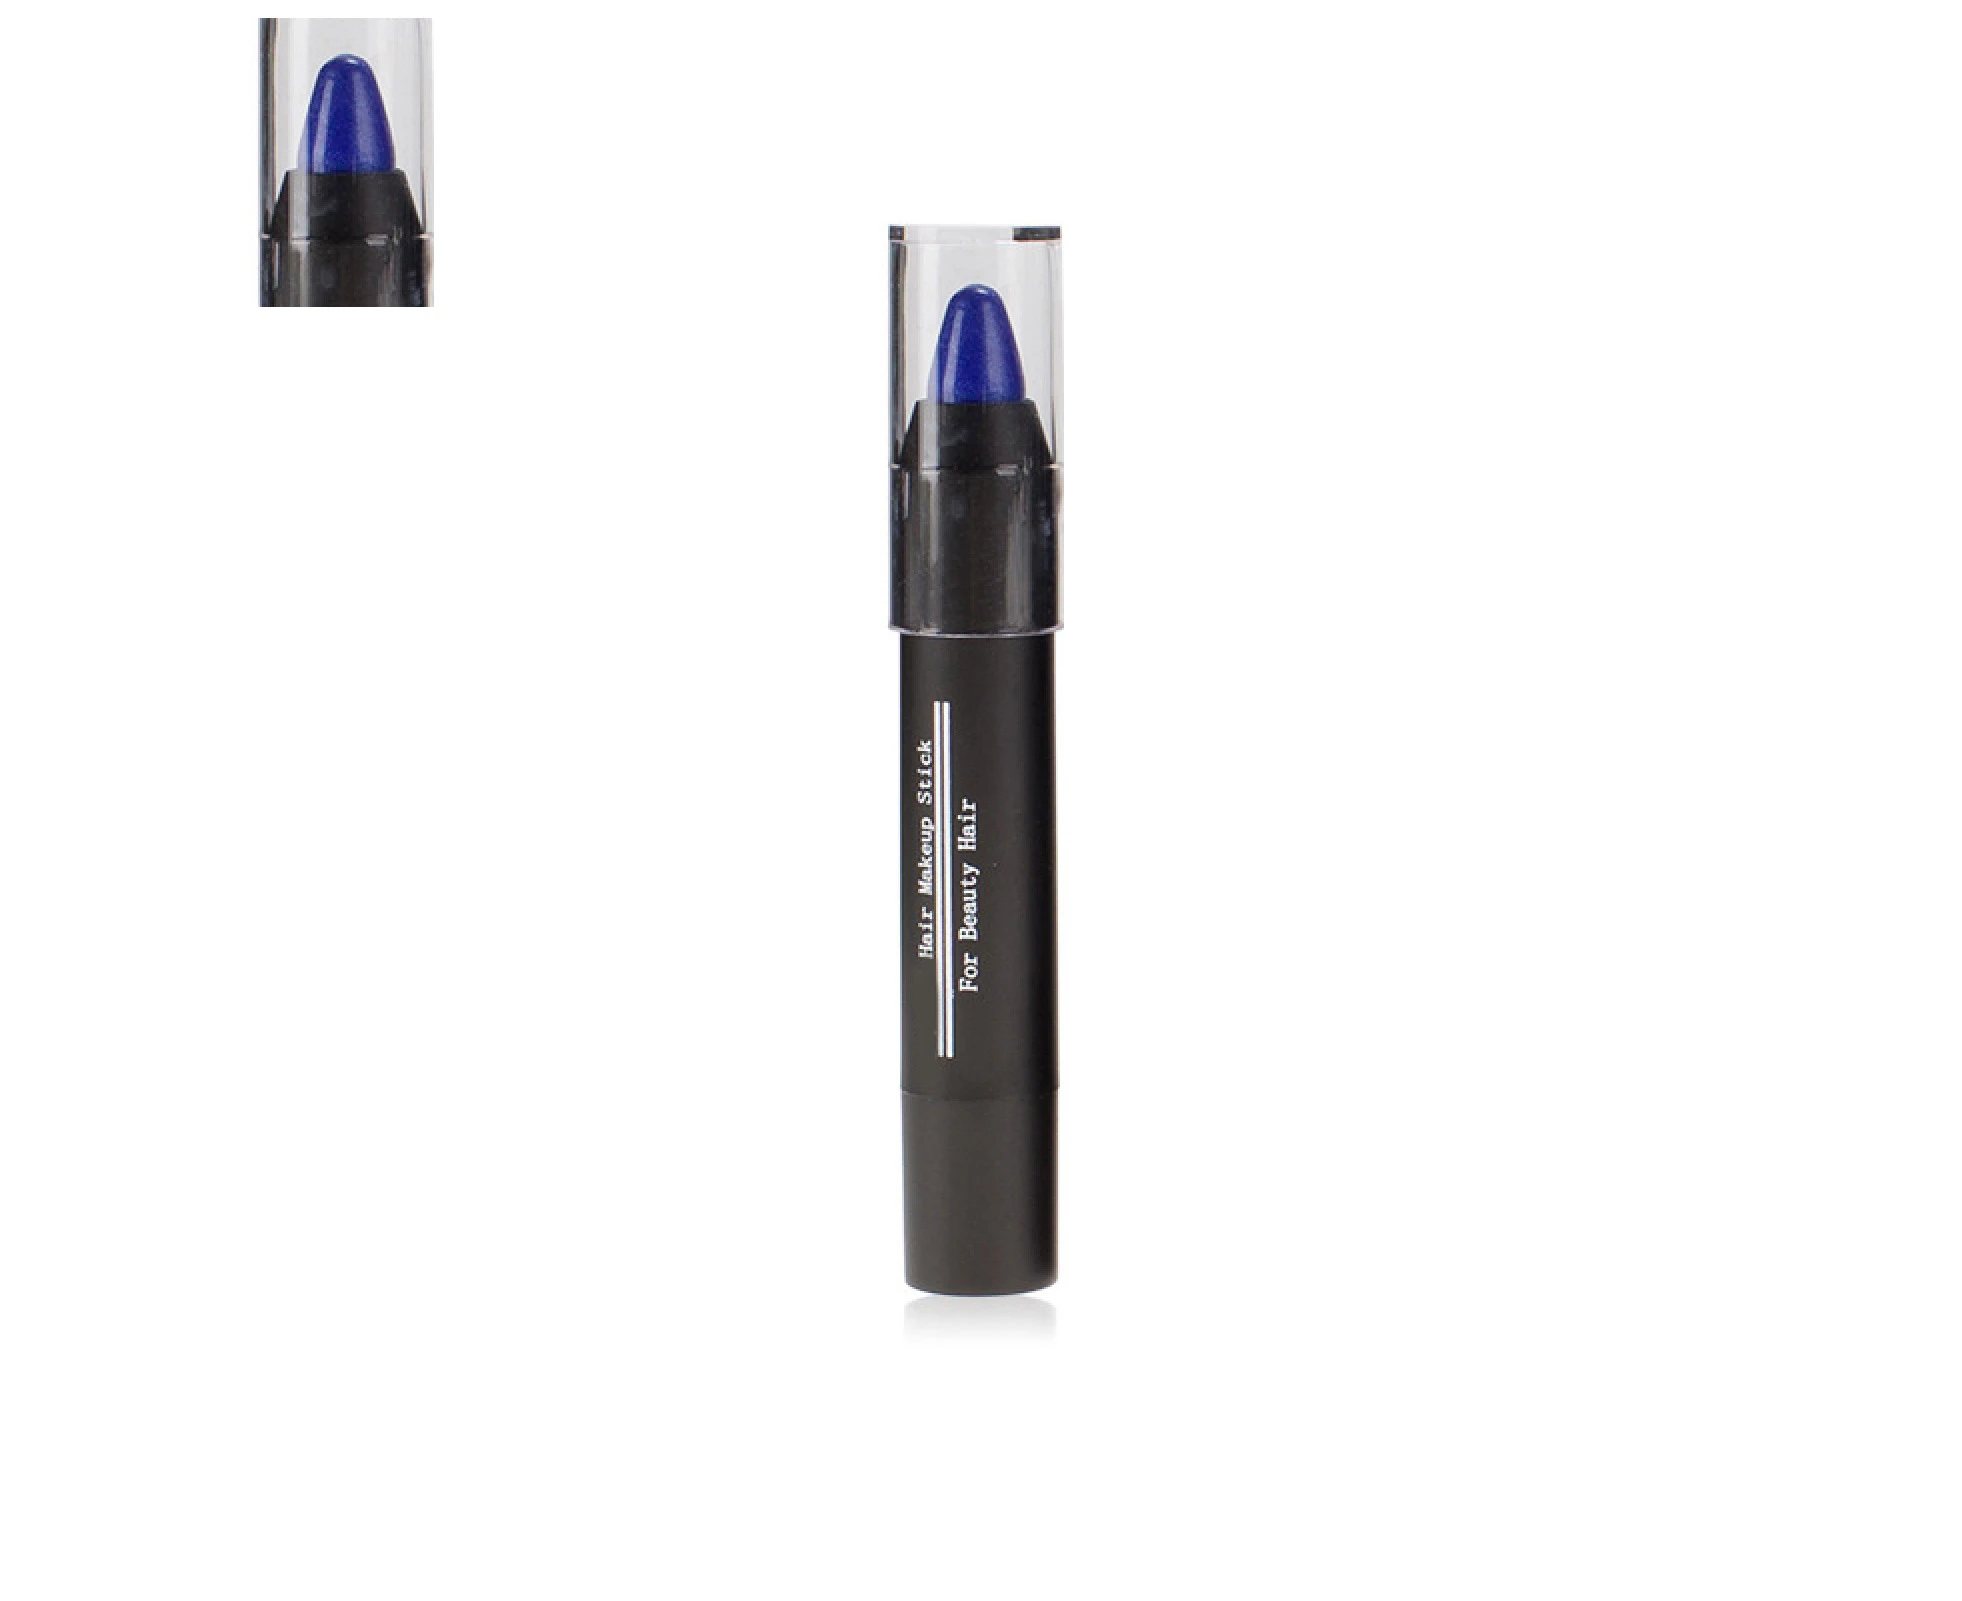  Hair Dye Pen High Saturation Quick Dye Portable Hair Touch up Chalk  Makeup Accessories-Purple .au